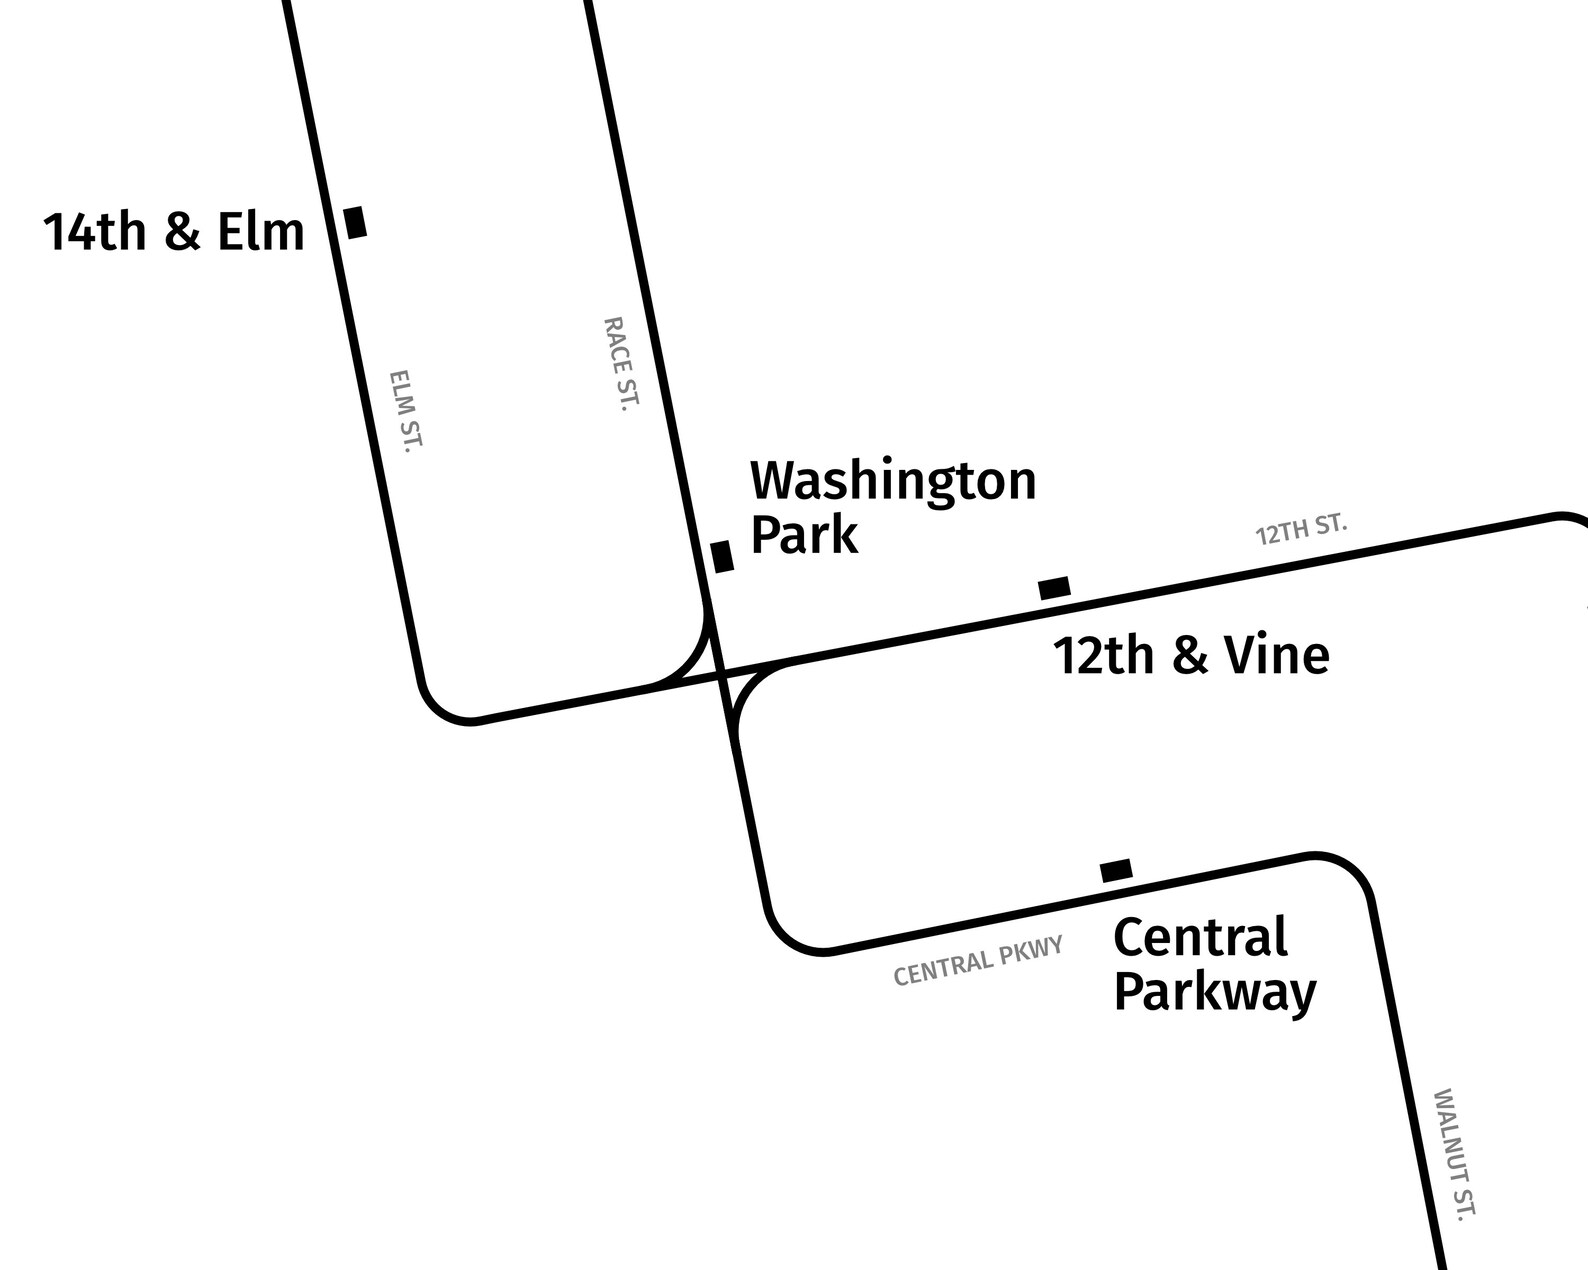 Cincinnati Streetcar Route Map